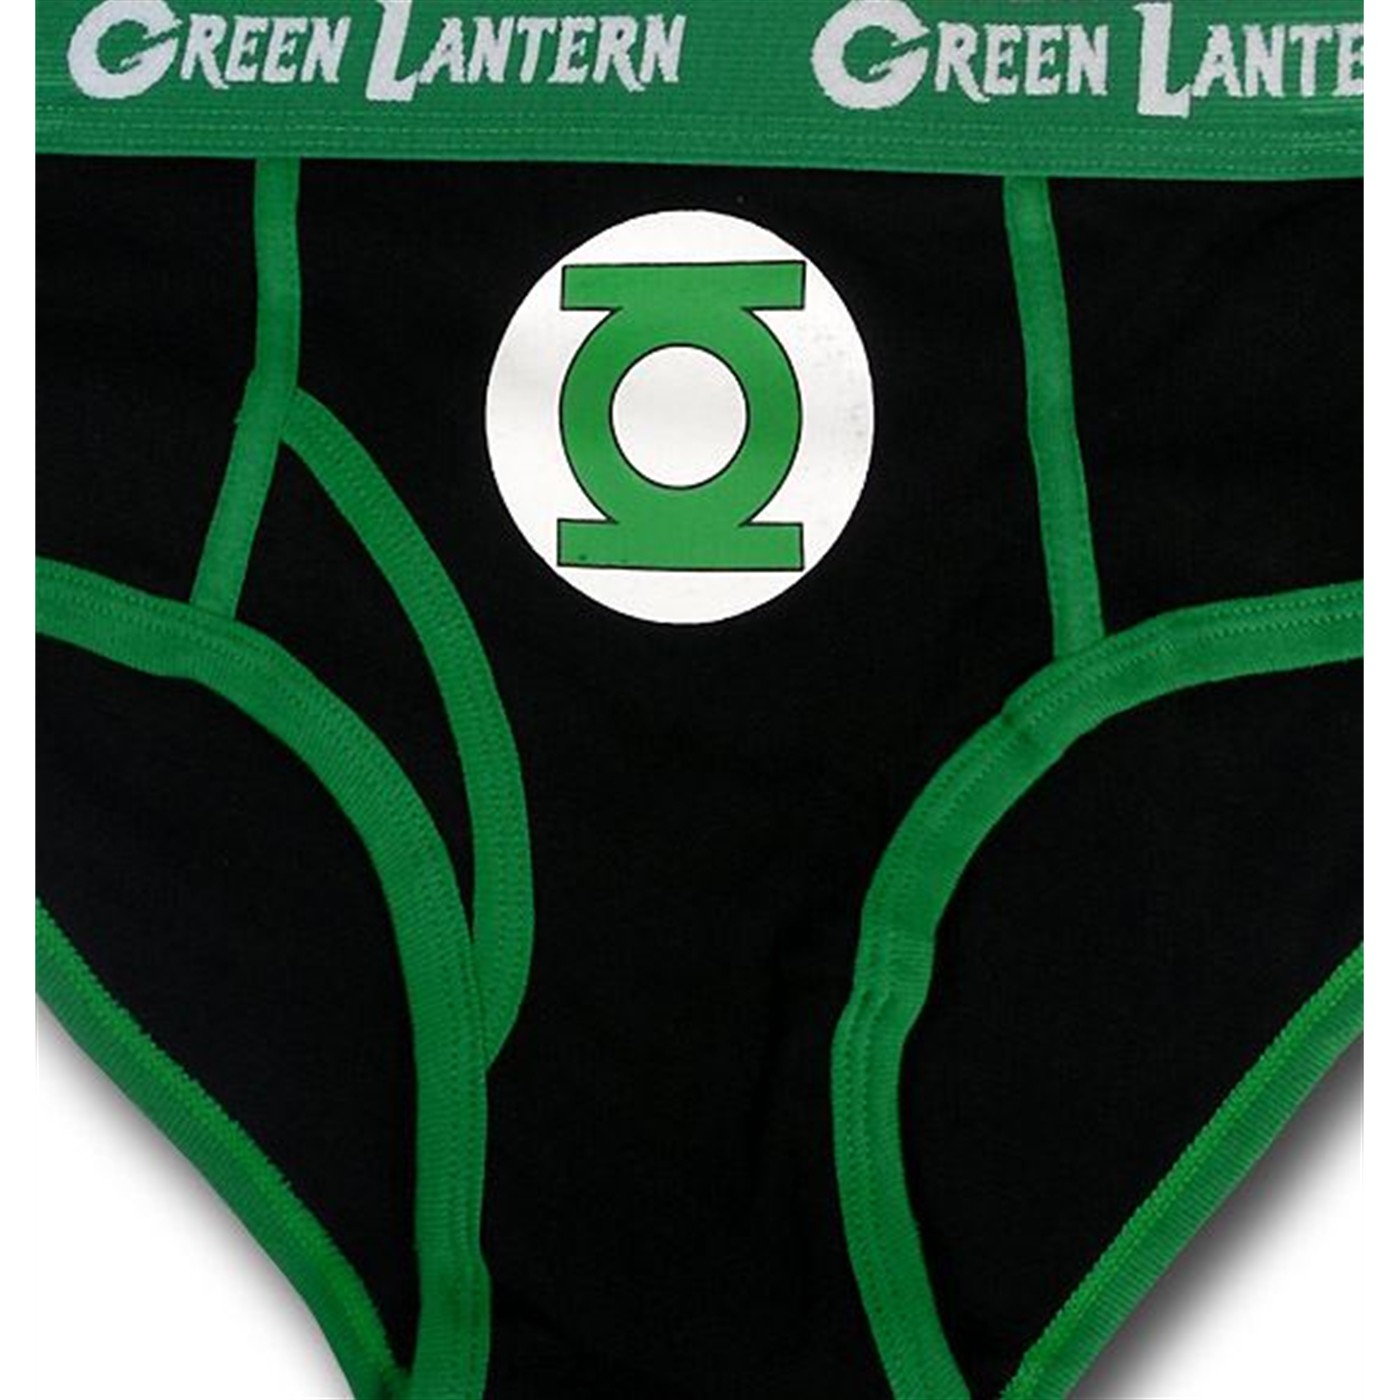 Green Lantern Symbol Black Briefs